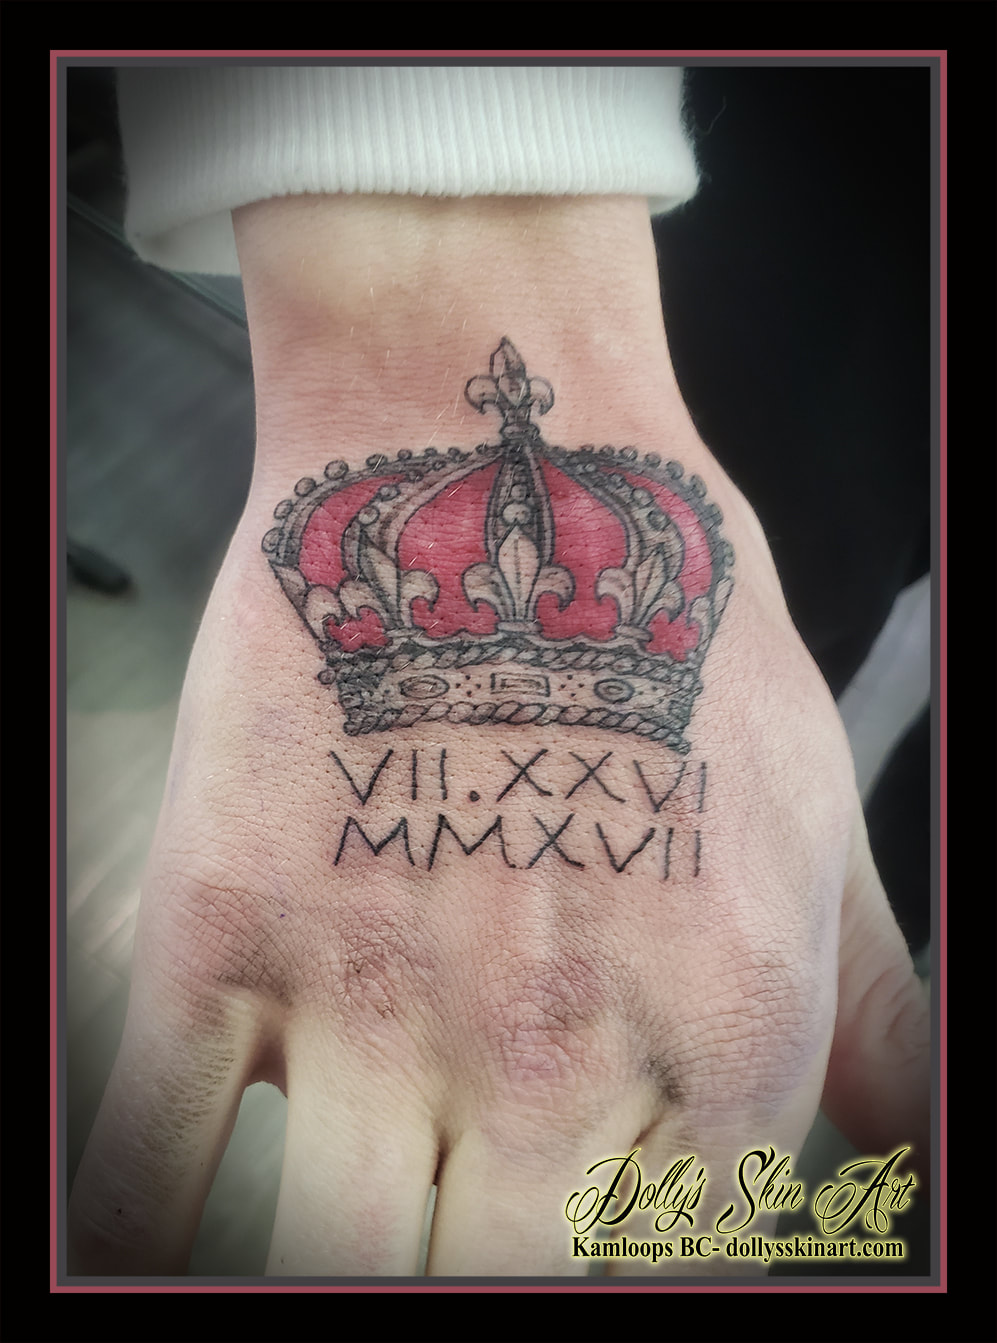 crown tattoo king hat red numerals black shading hand tattoo kamloops dolly's skin art